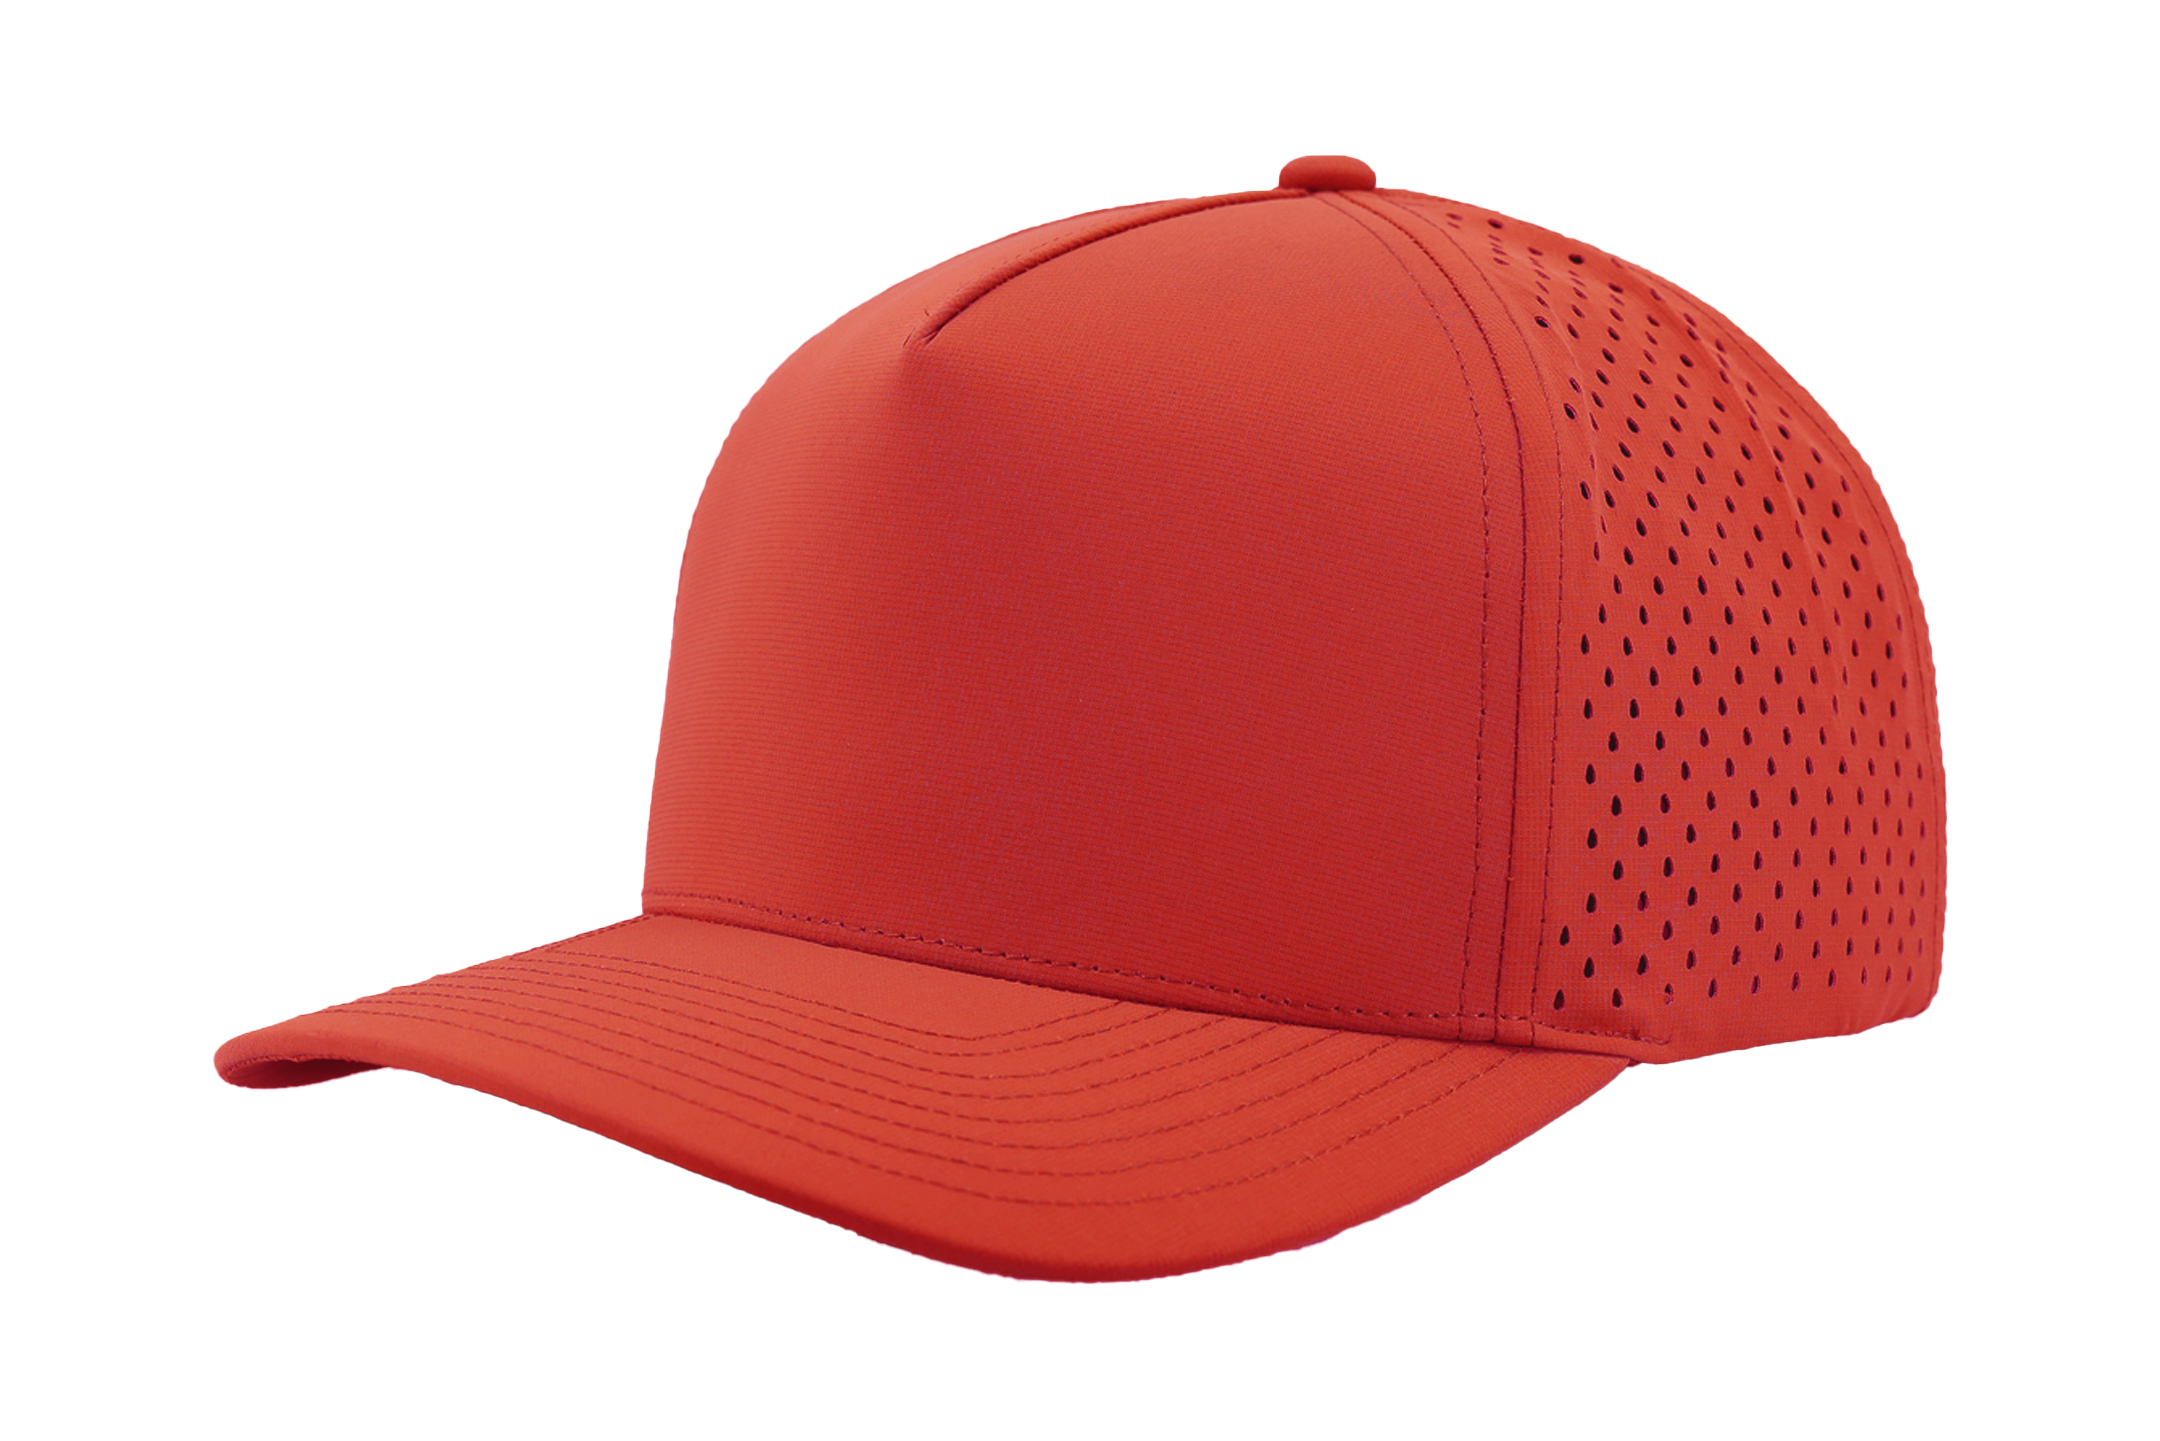 Zapped Water 5 Repellent panel | Premium Headwear hat Blackhawk custom | | hat